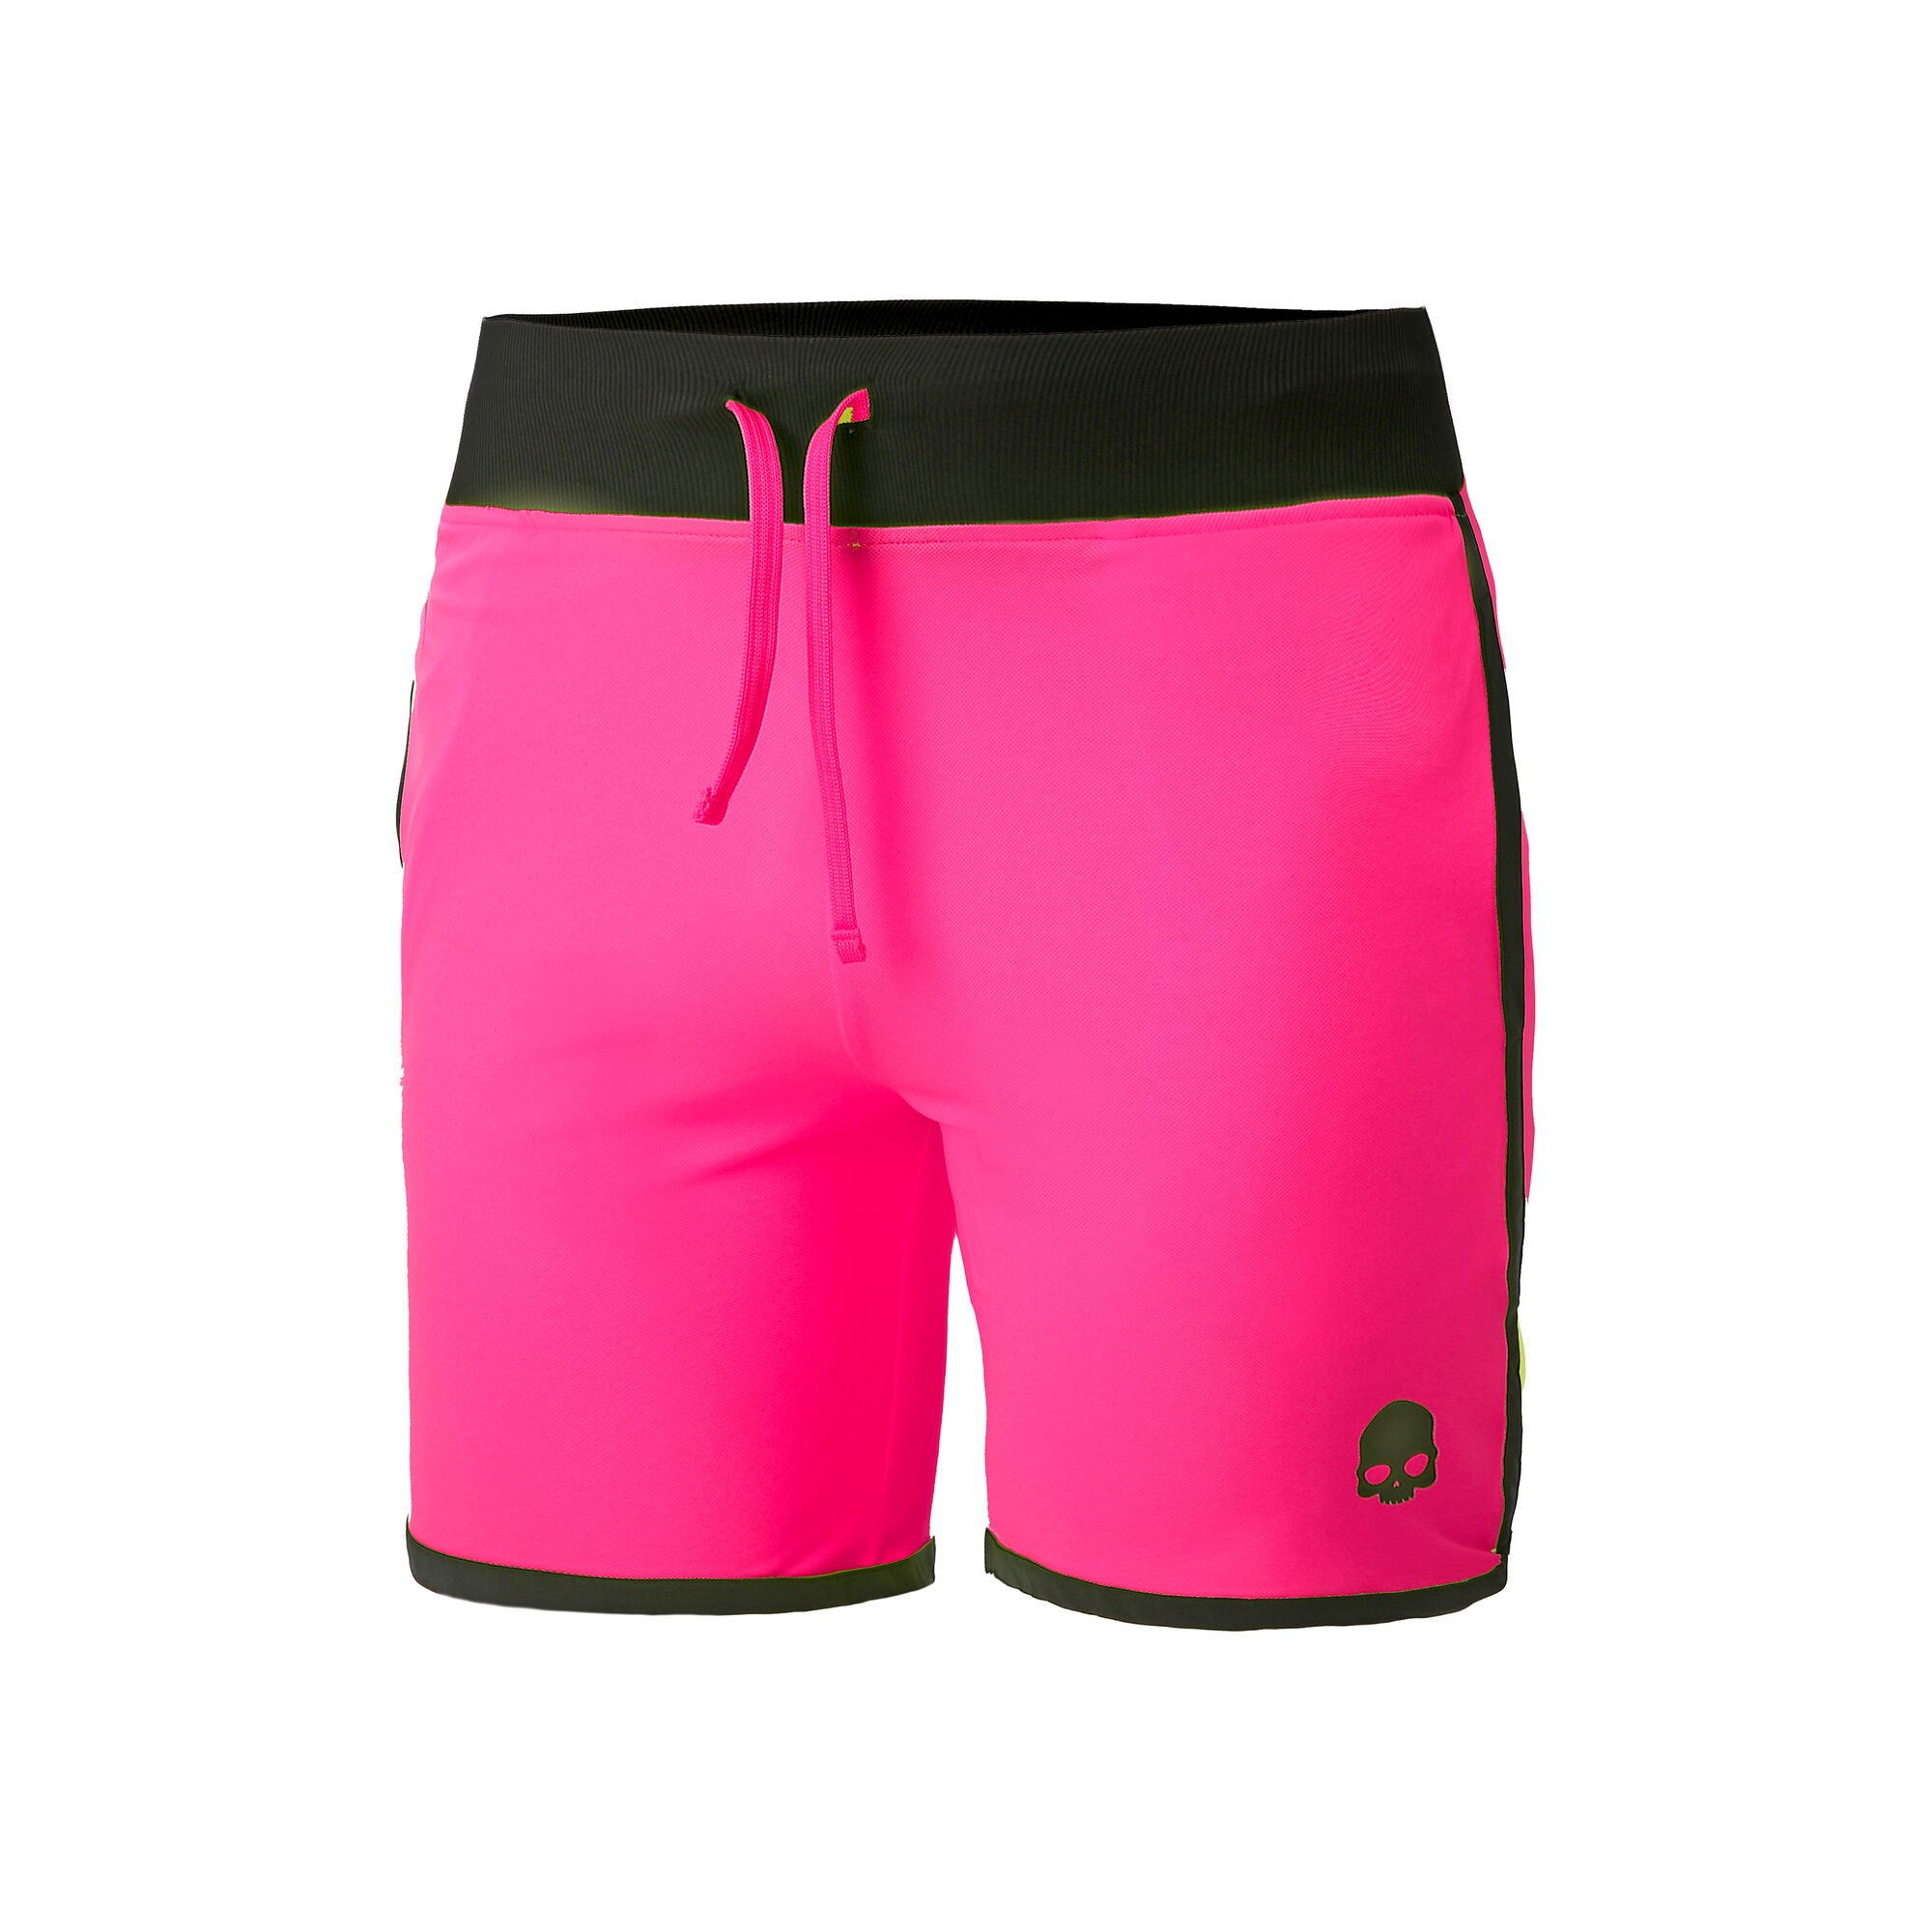 Tech Shorts Men - Pink